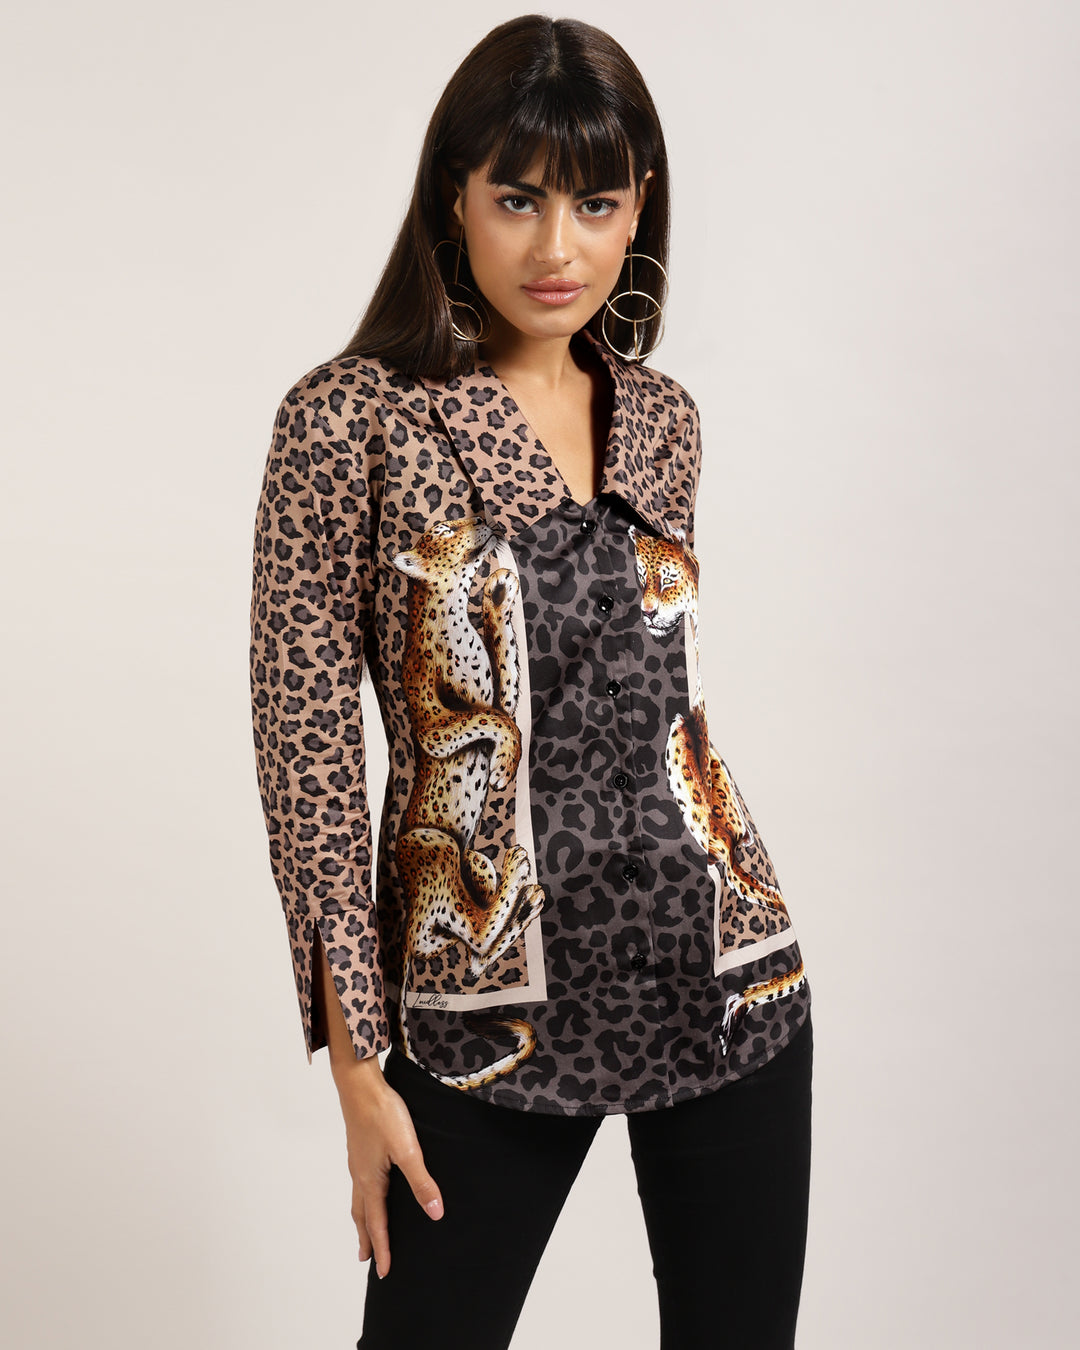 "Luxury Women's Leopard Print Shirts"